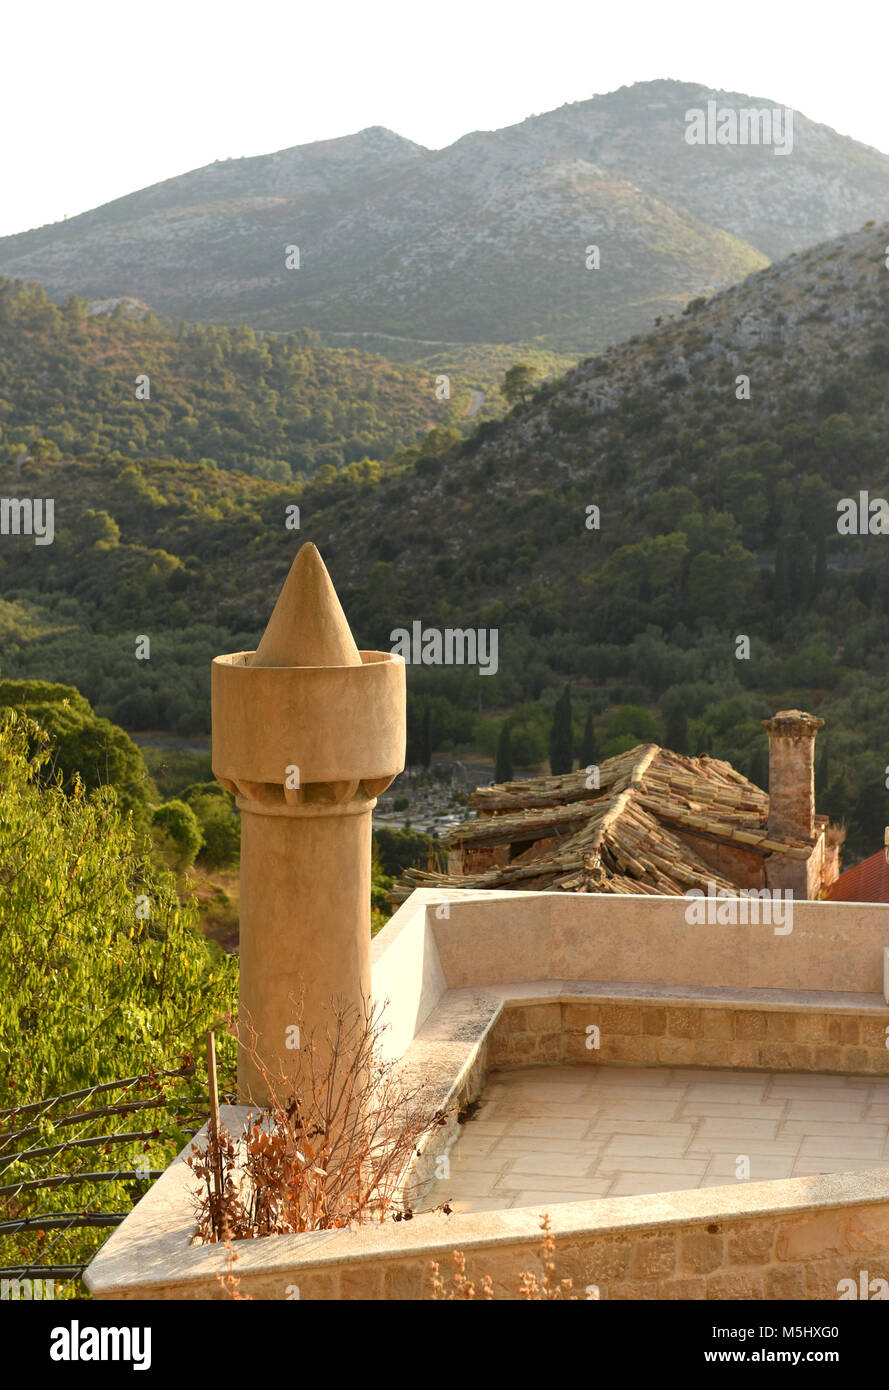 Cylindrical chimneys Fumar (fumari) on Lastovo island, Croatia Stock Photo